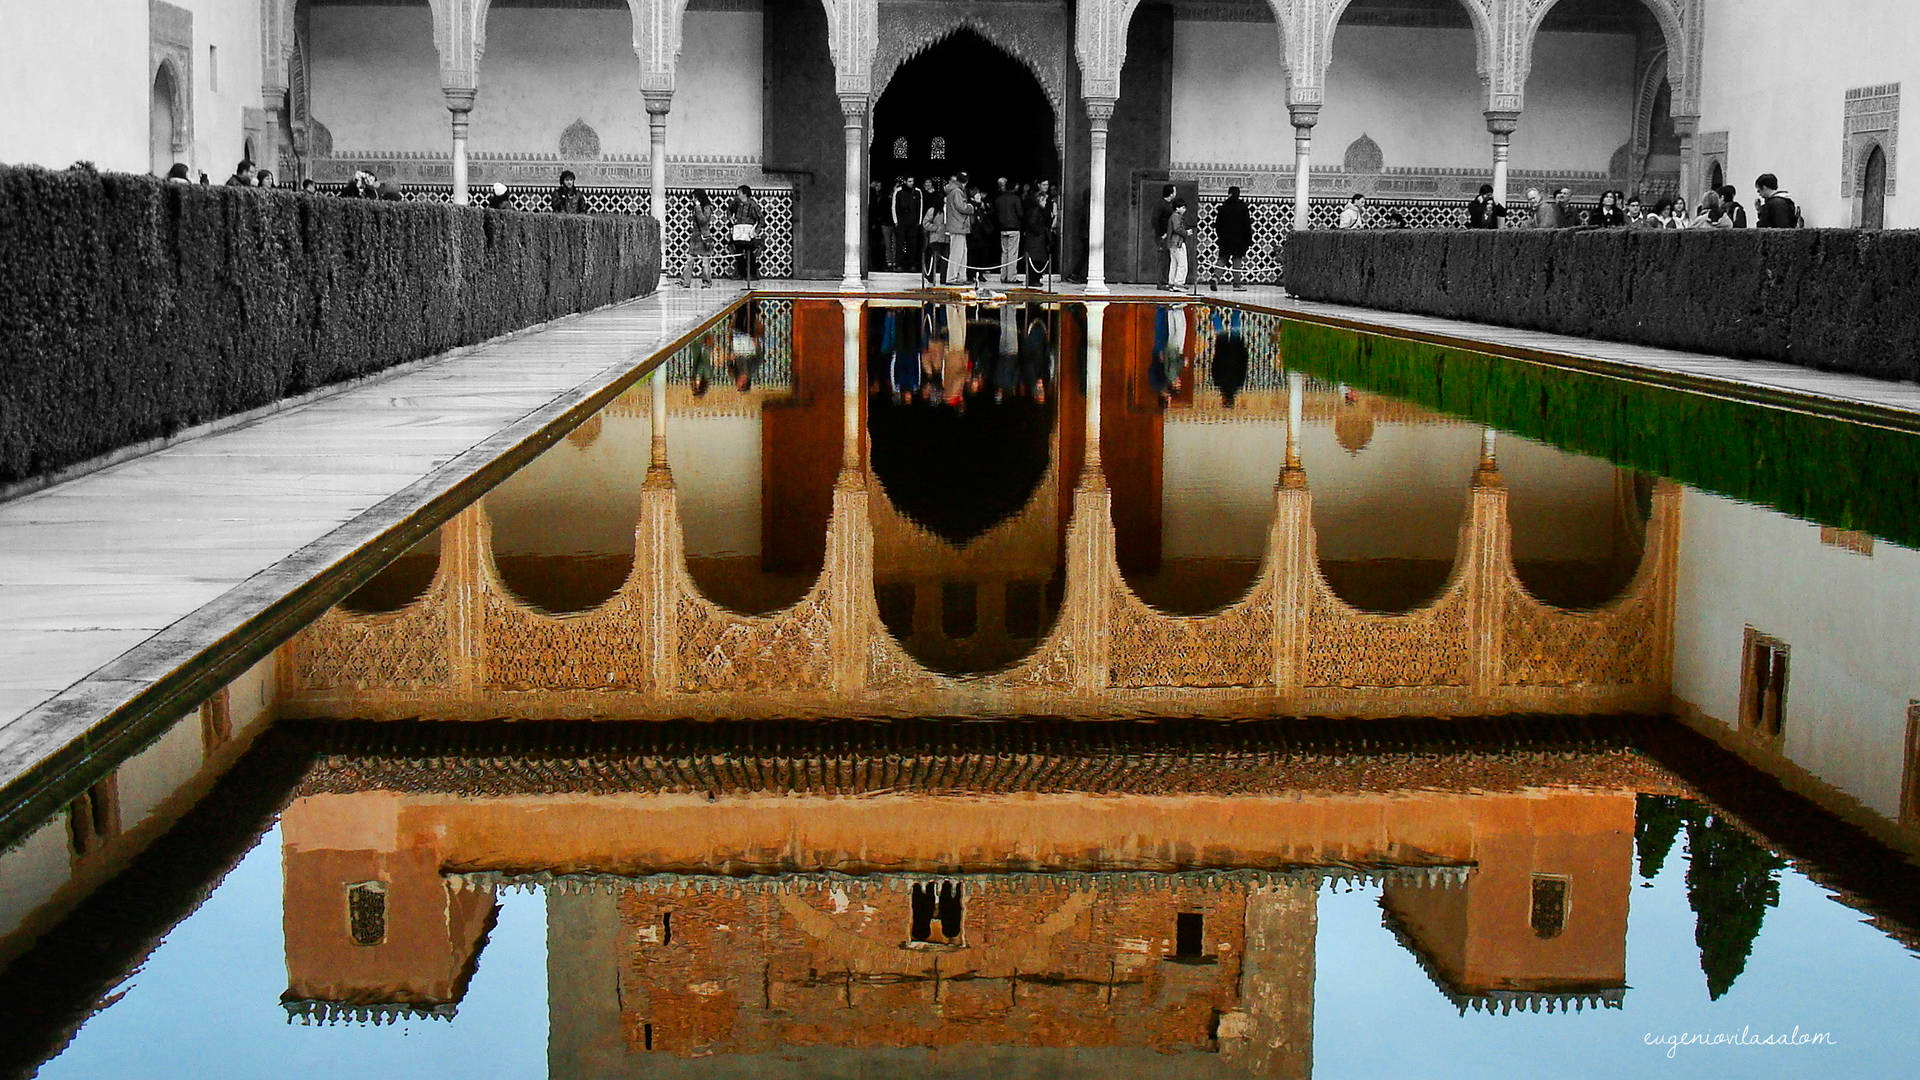 Alhambra 2816 X 1584 Wallpaper